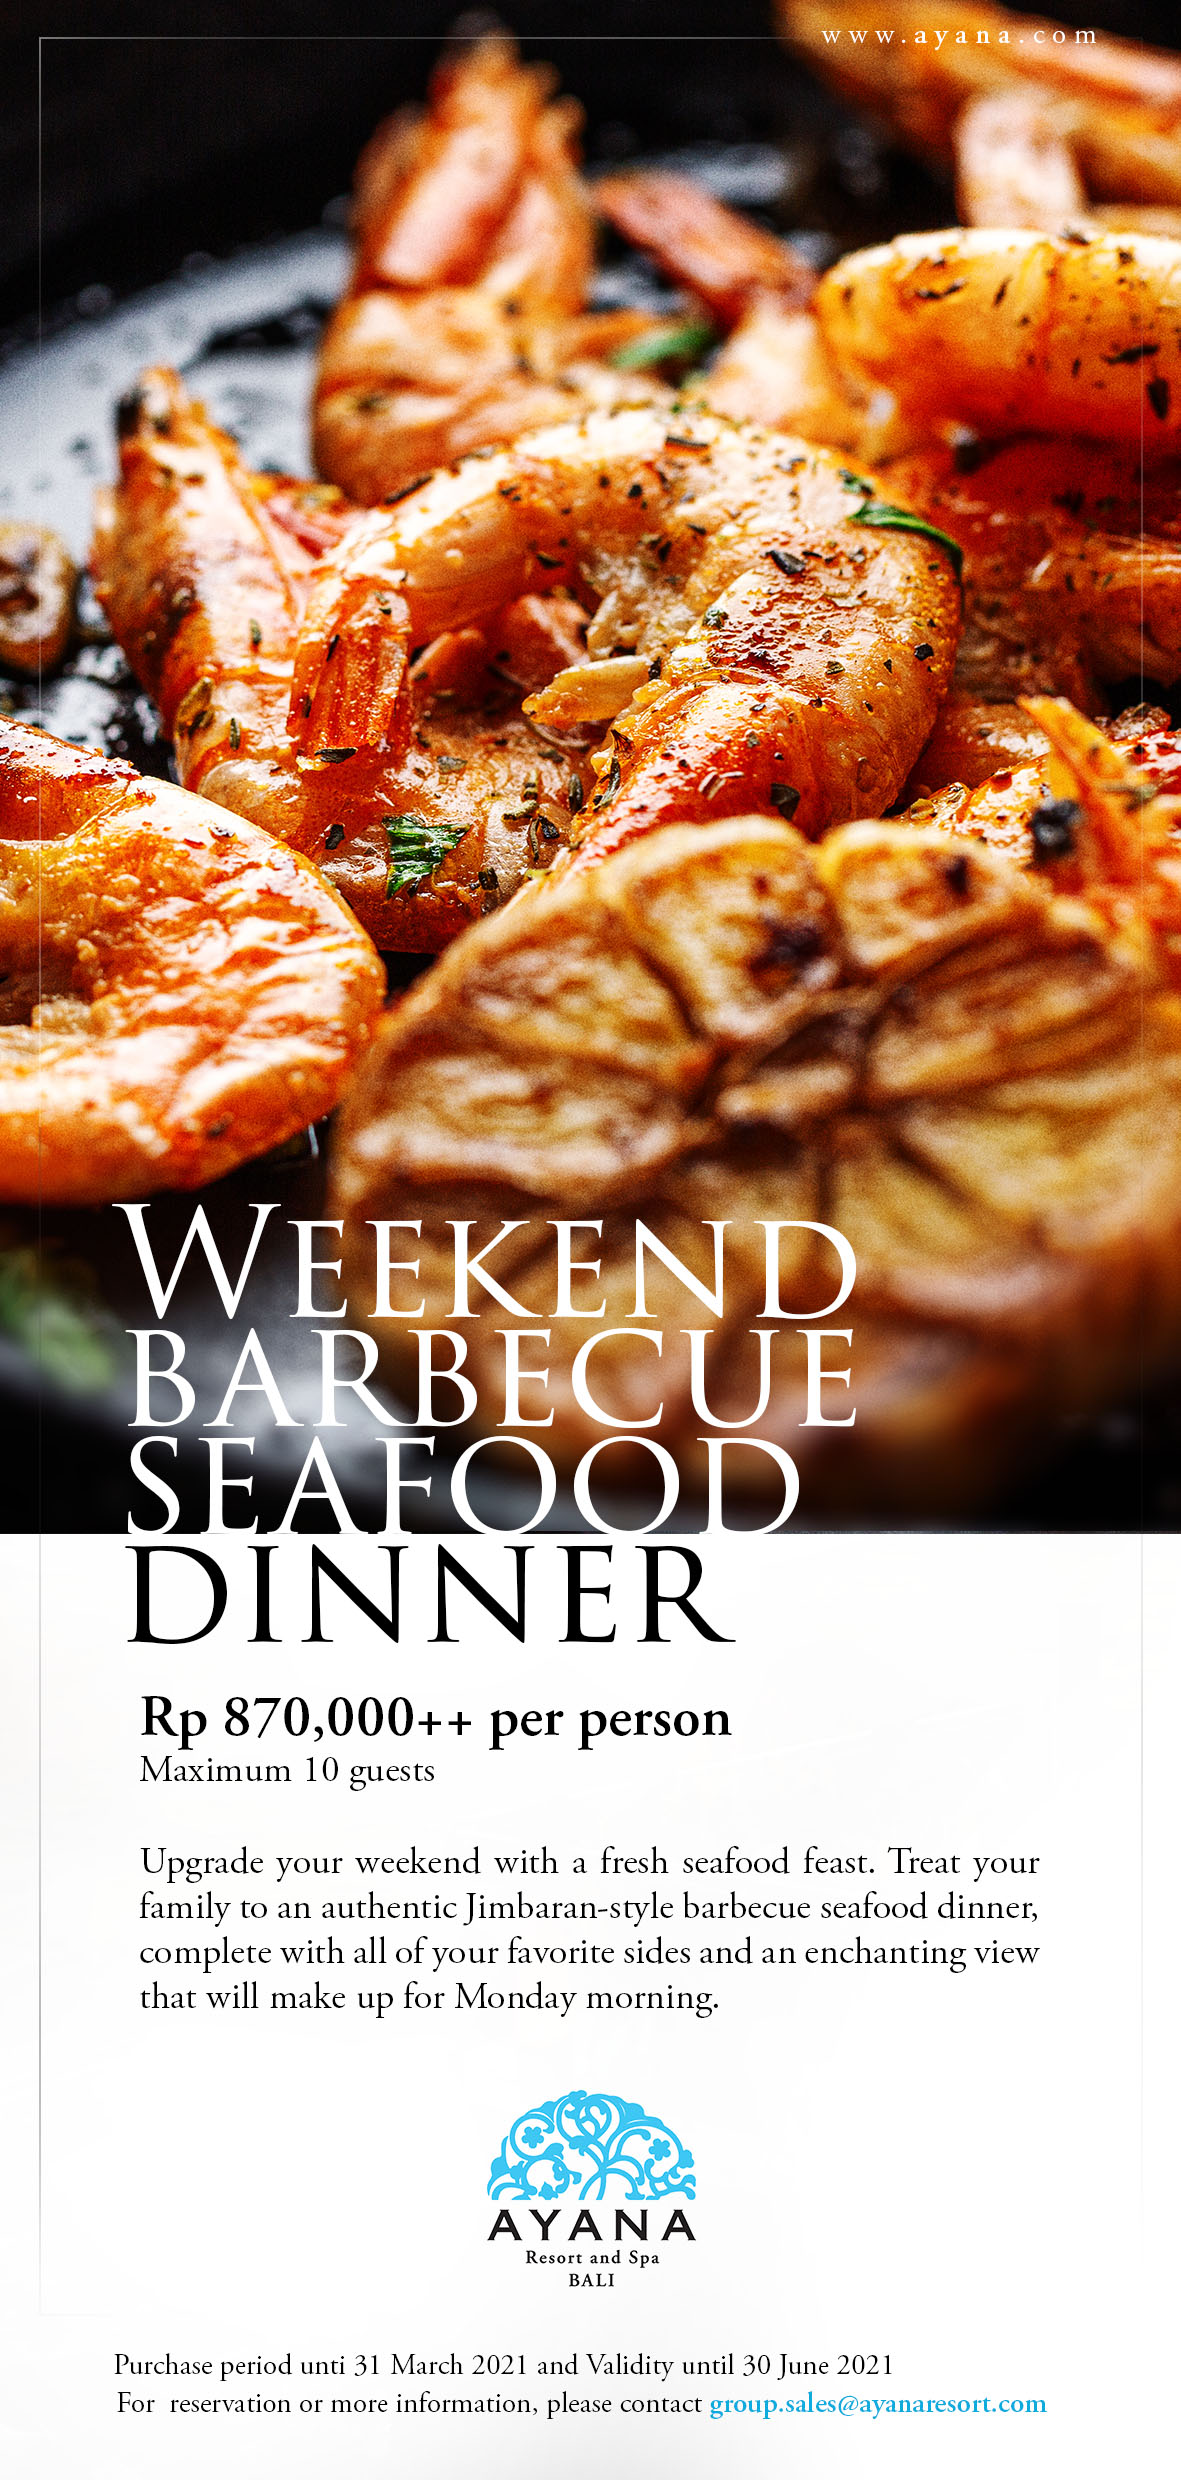 AYANA_Weekend_BBQ_Seafood_Dinner